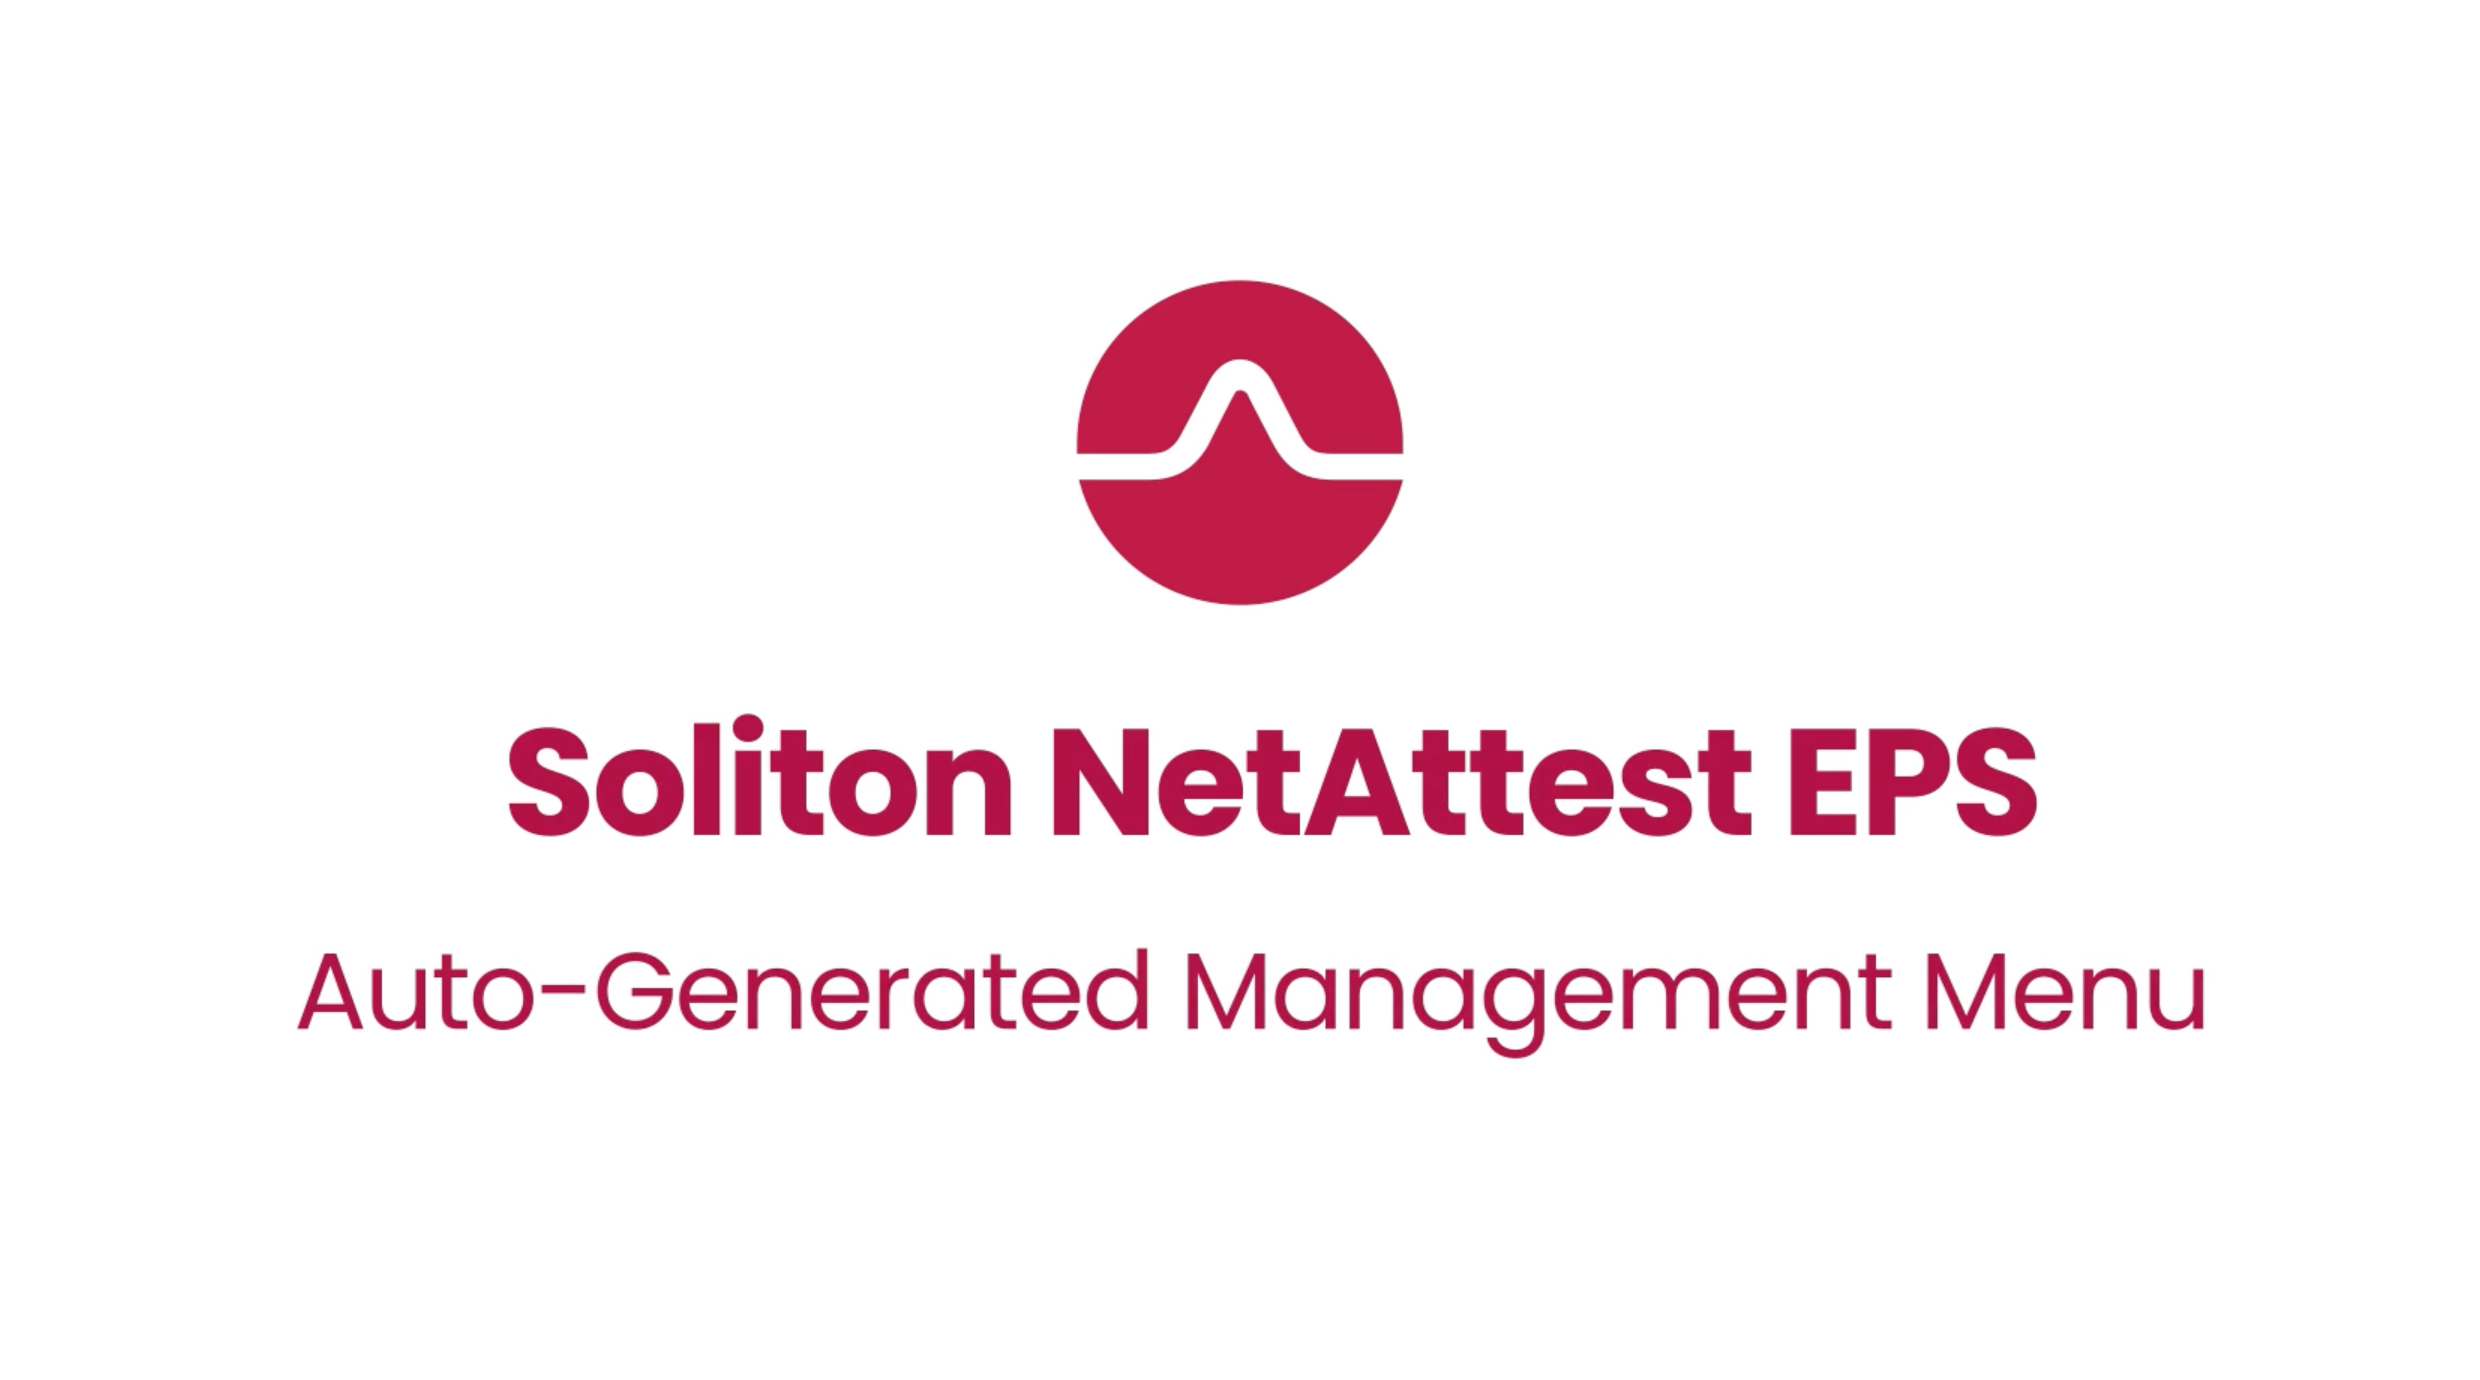 NetAttest EPS’ Context-based menu